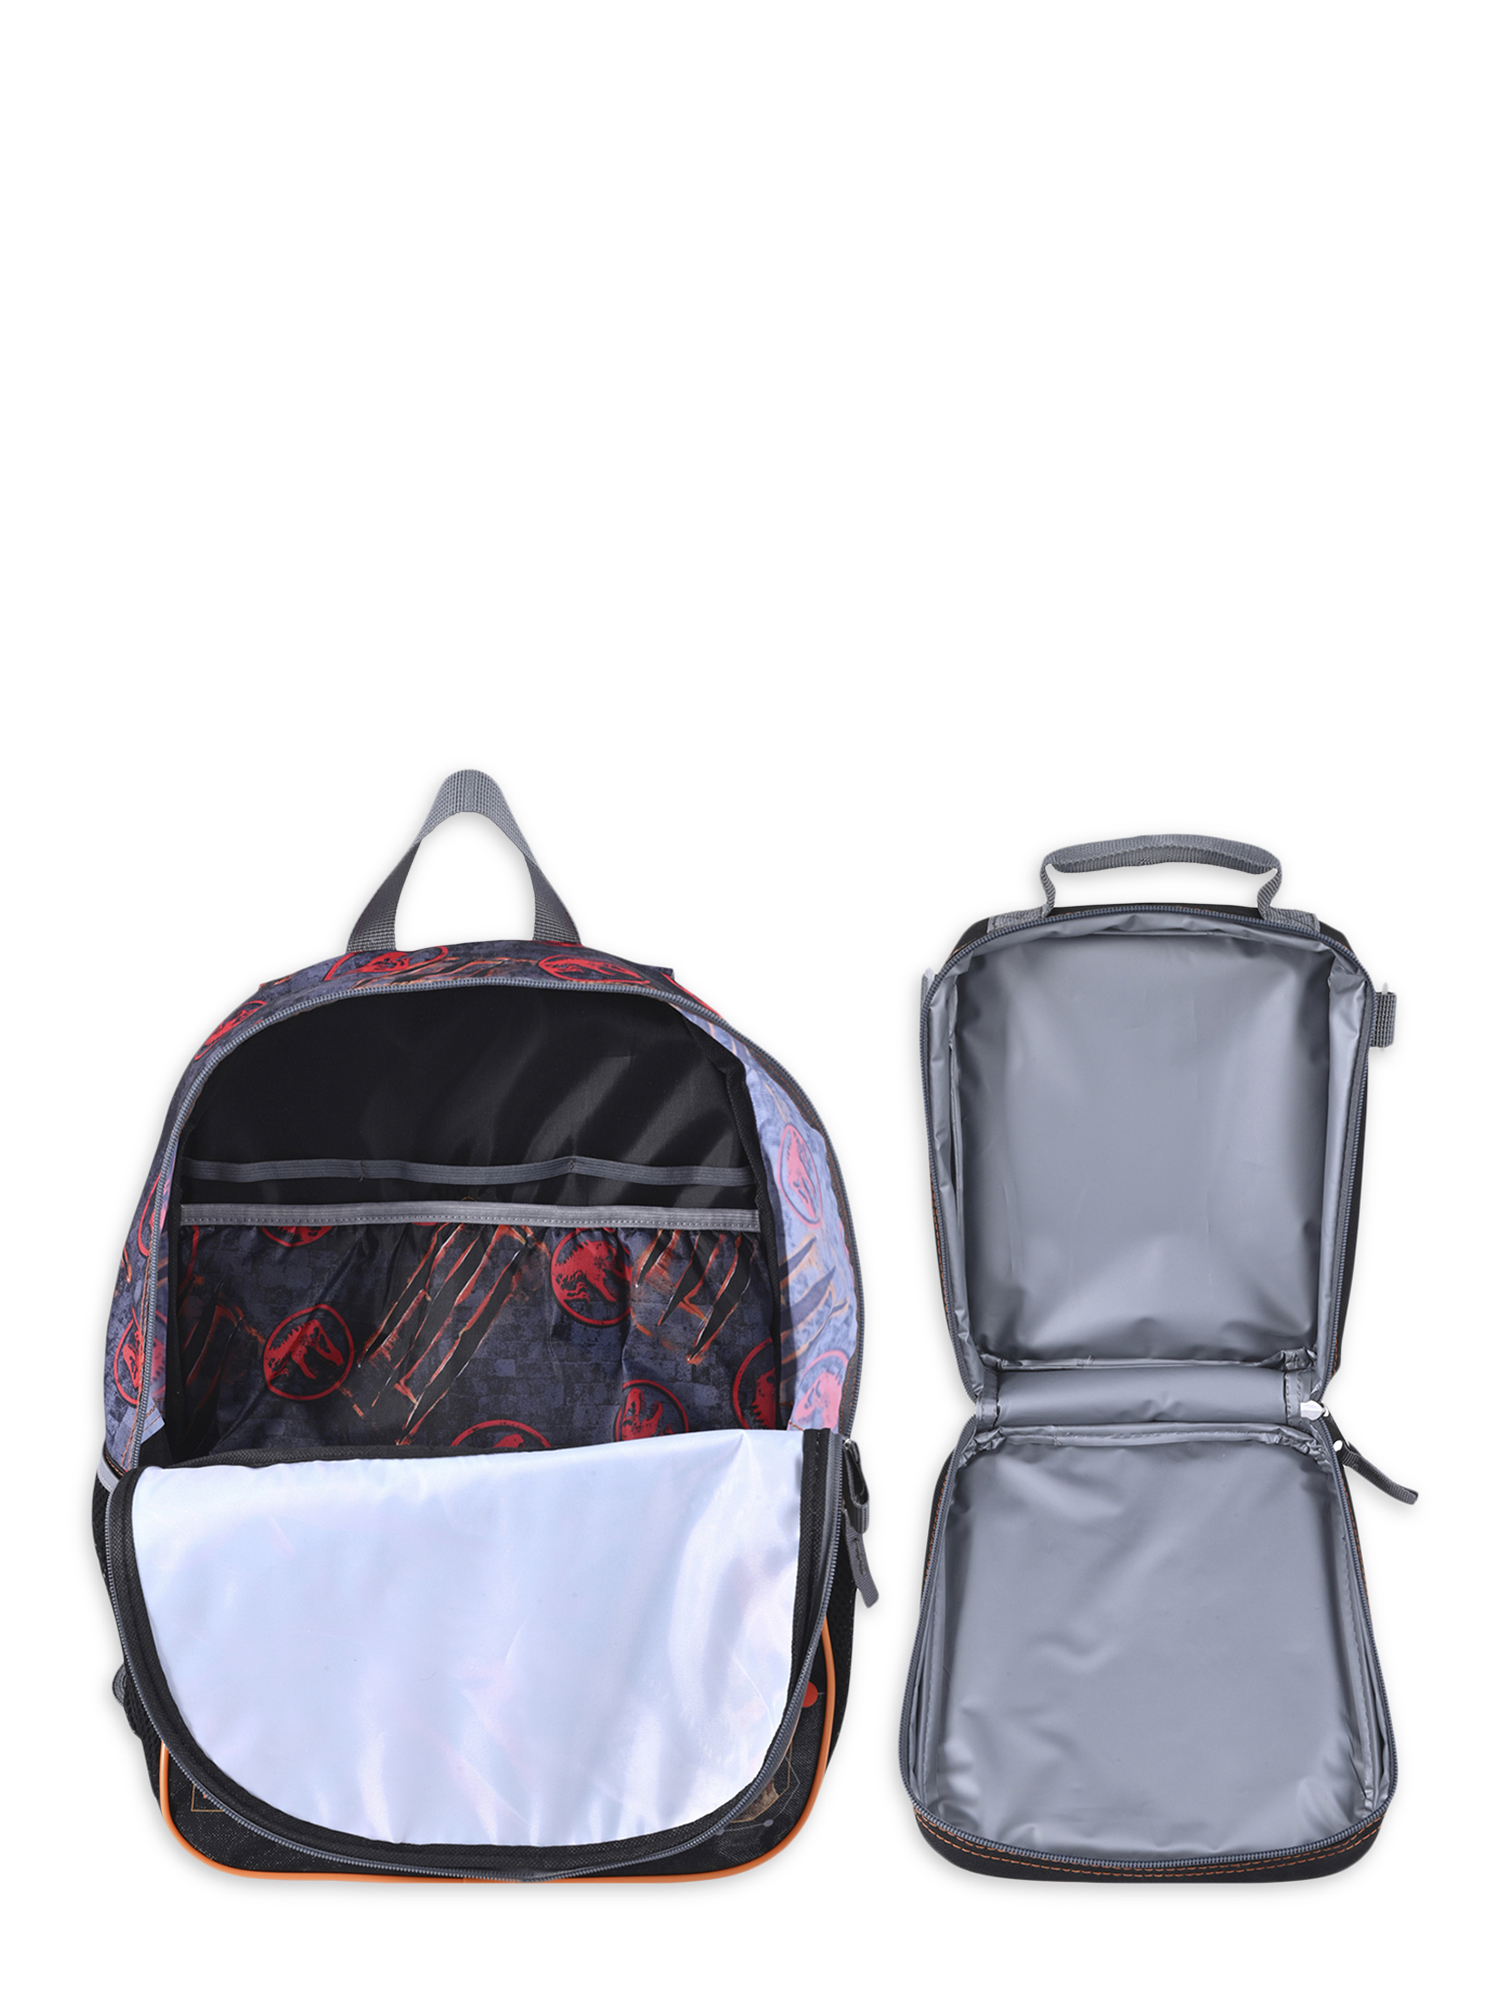 Universal Jurassic World Boys 17" Laptop Backpack 2-Piece Set with Lunch Bag, Black Orange - image 3 of 9